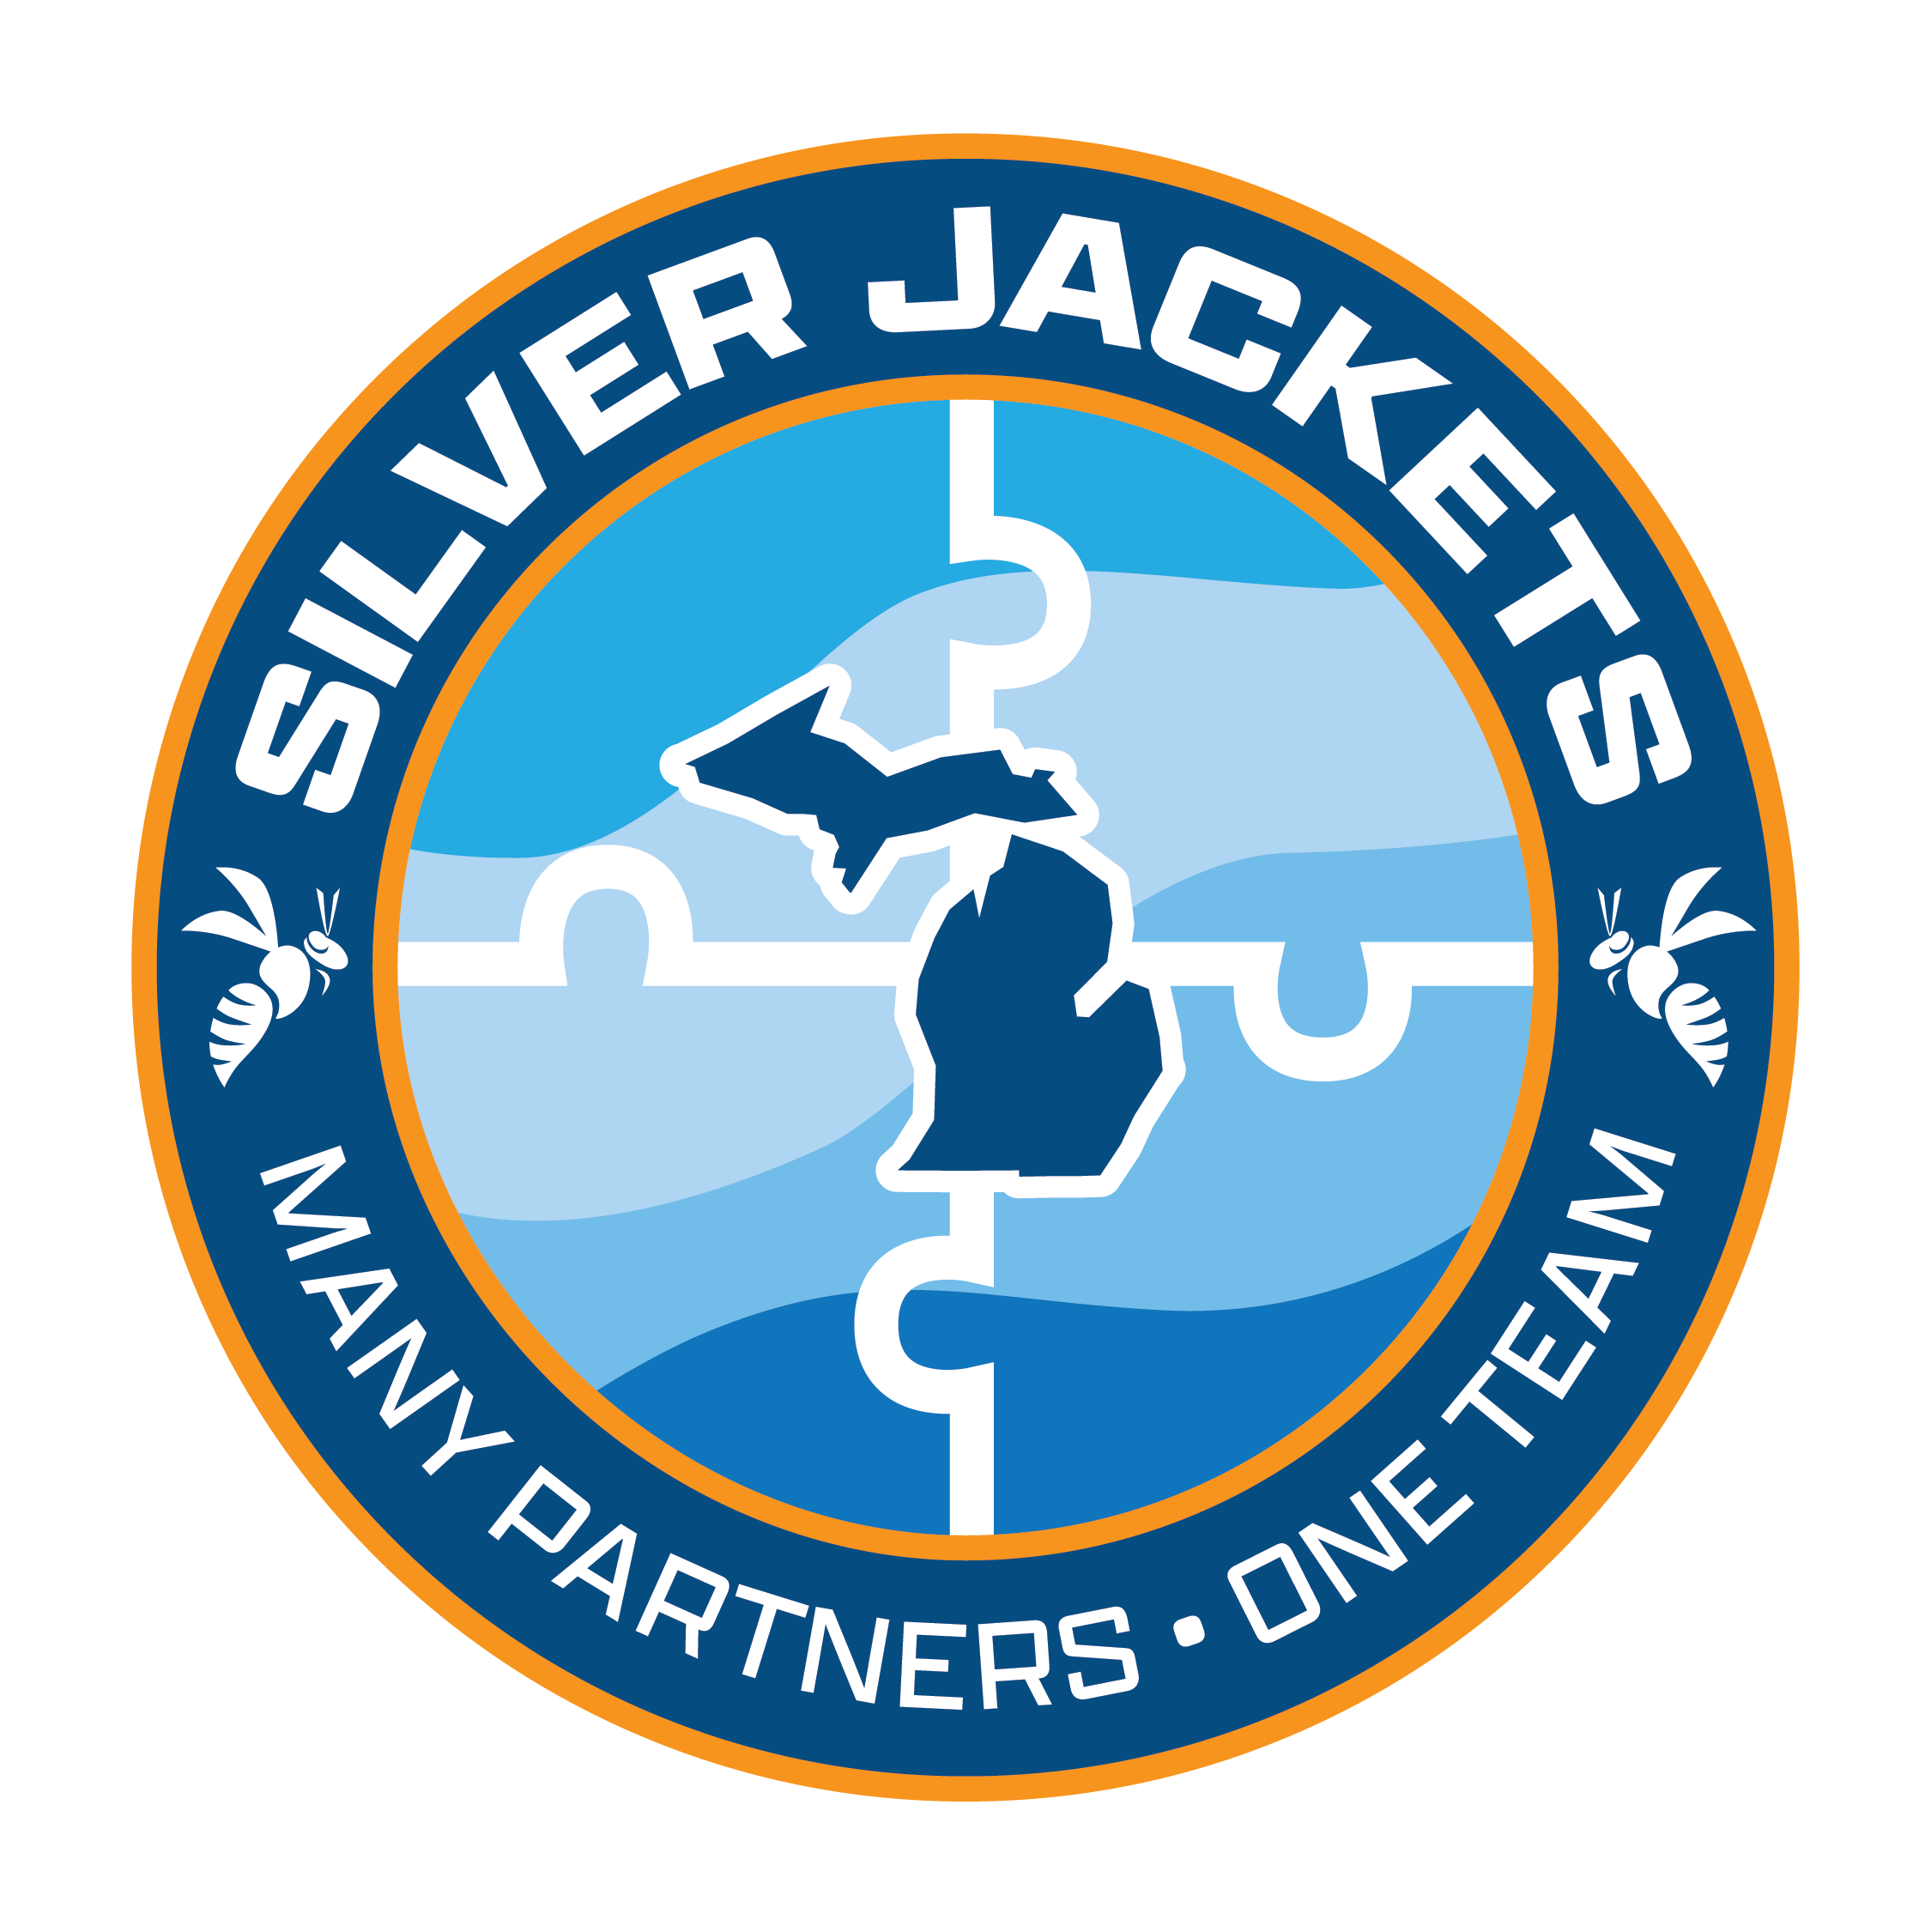 Michigan Silver Jackets logo